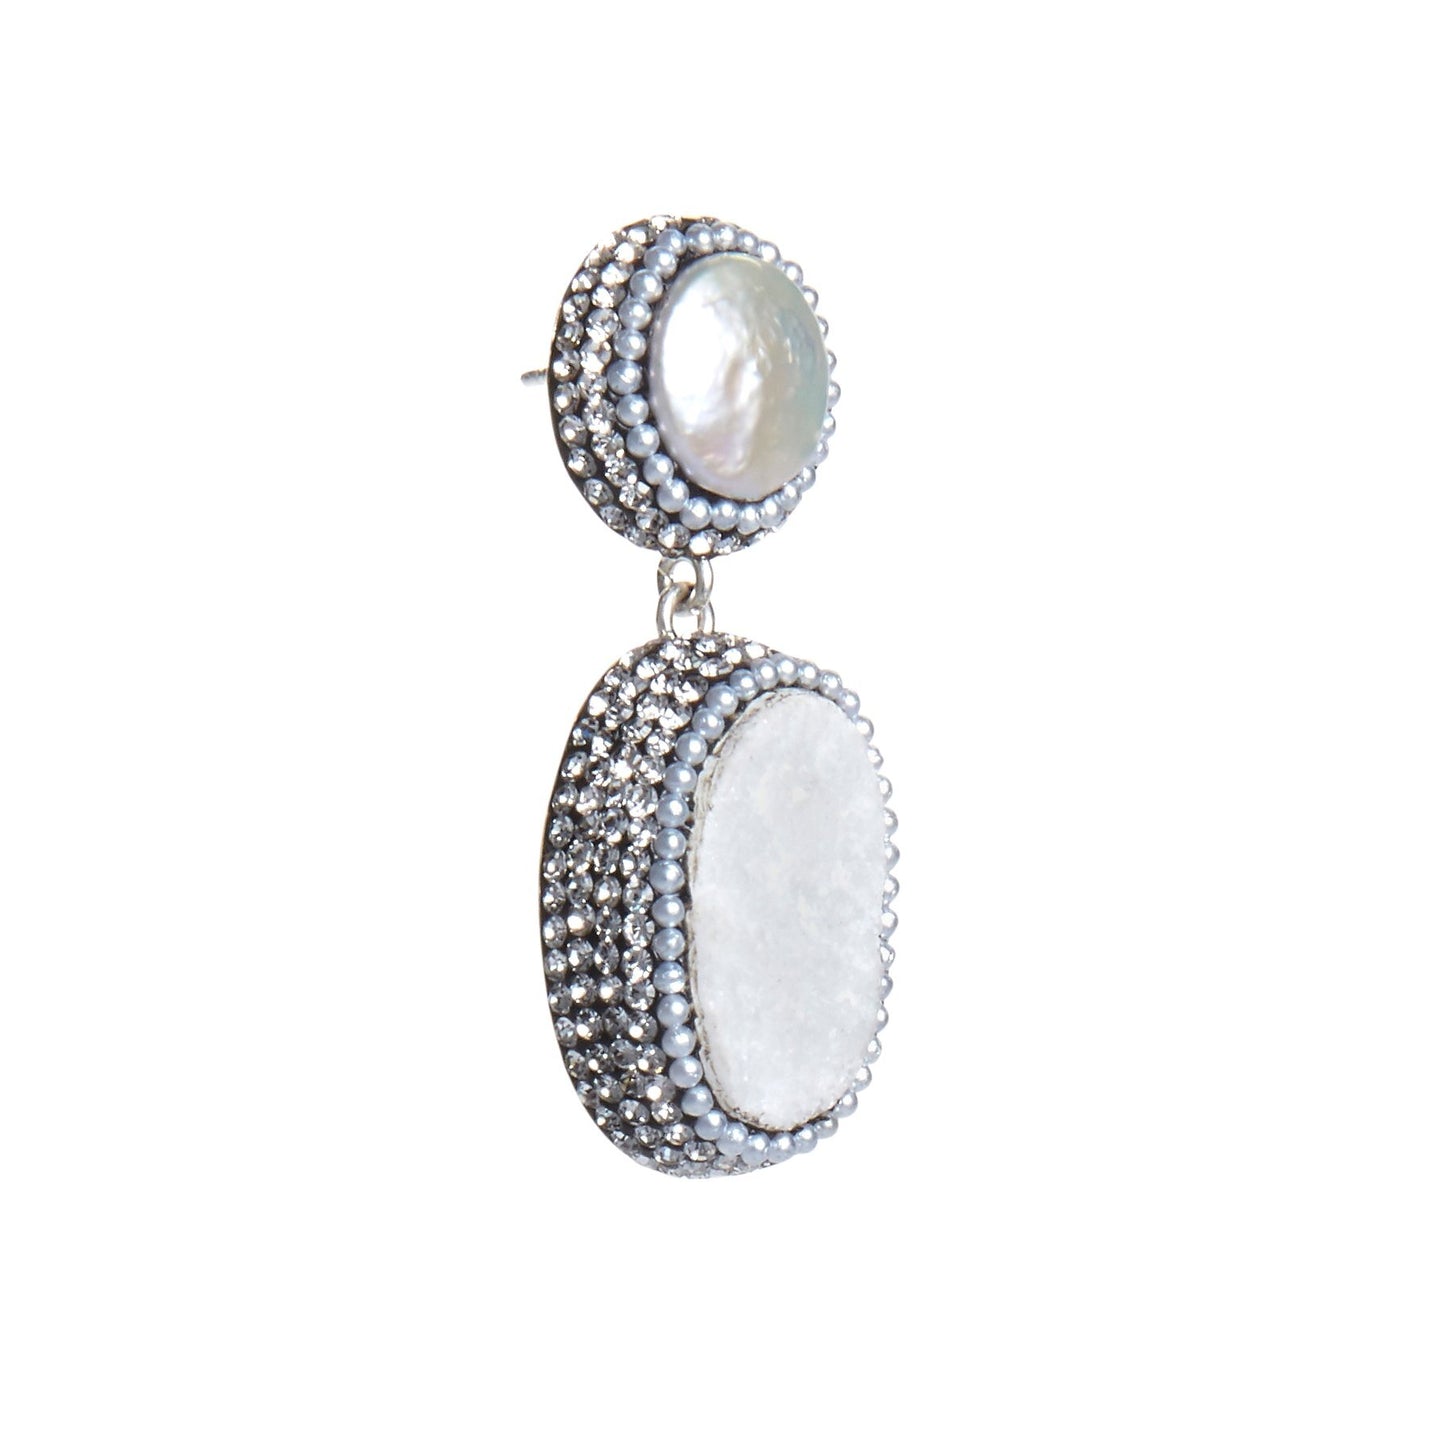 White Chalcedony Earrings